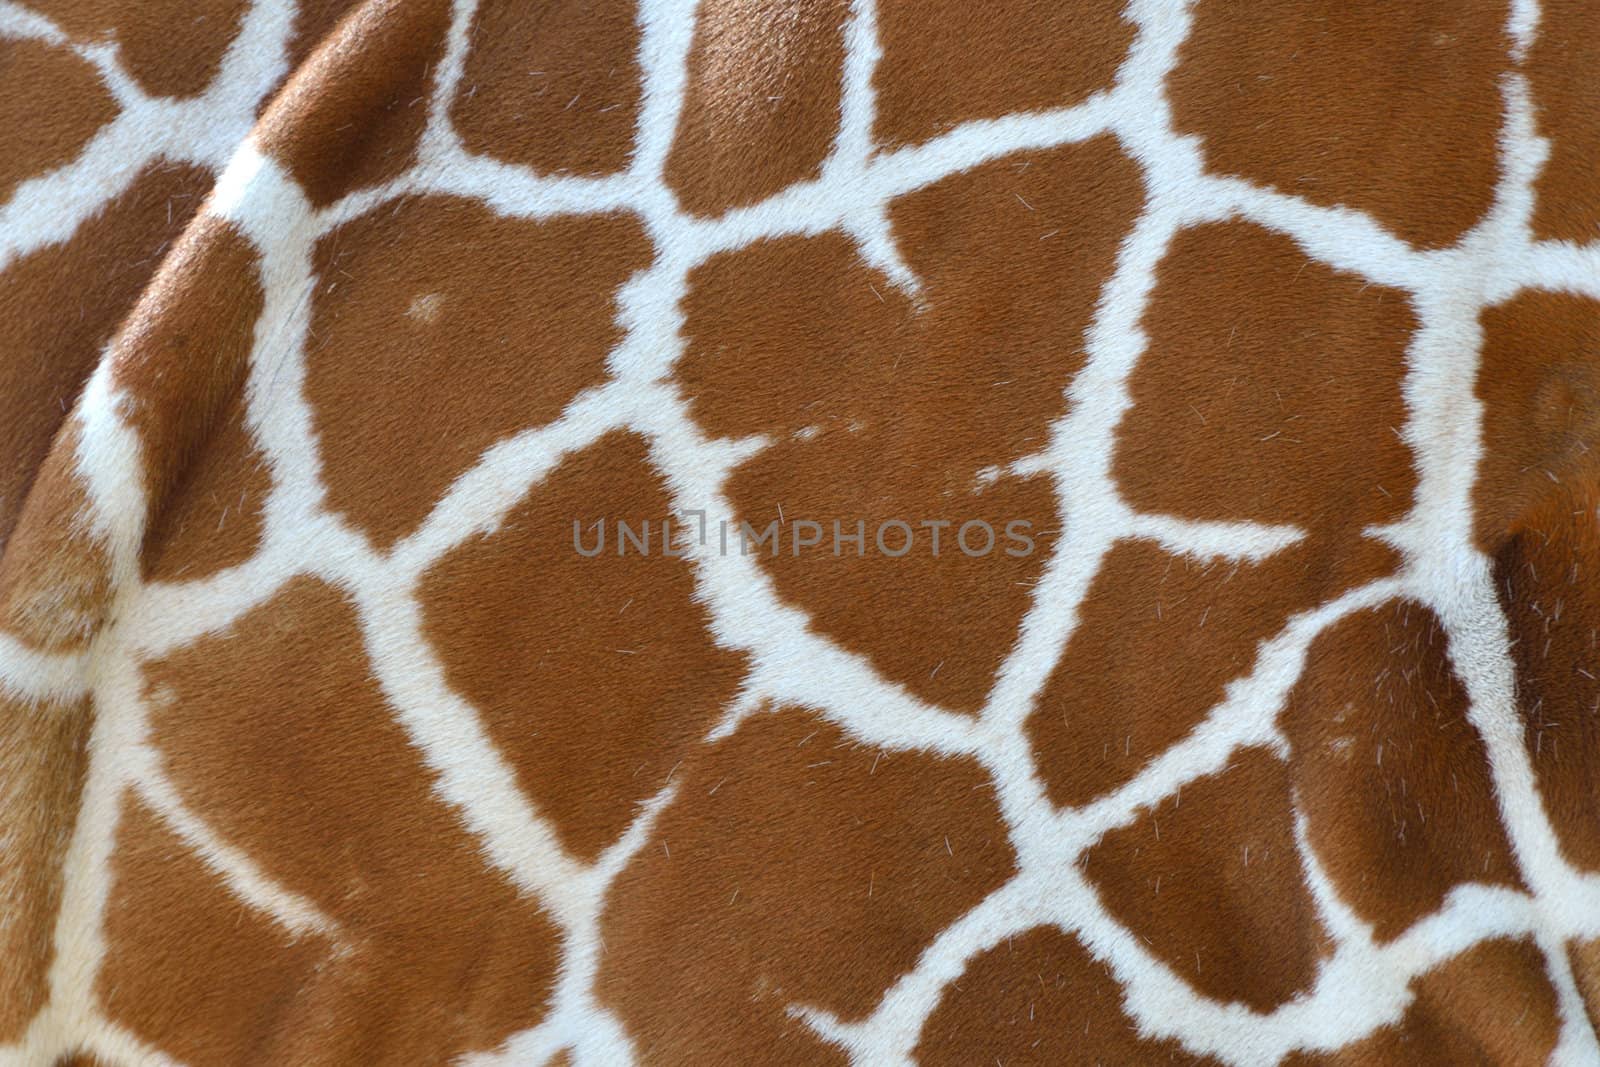 Giraffe fur detail by pauws99